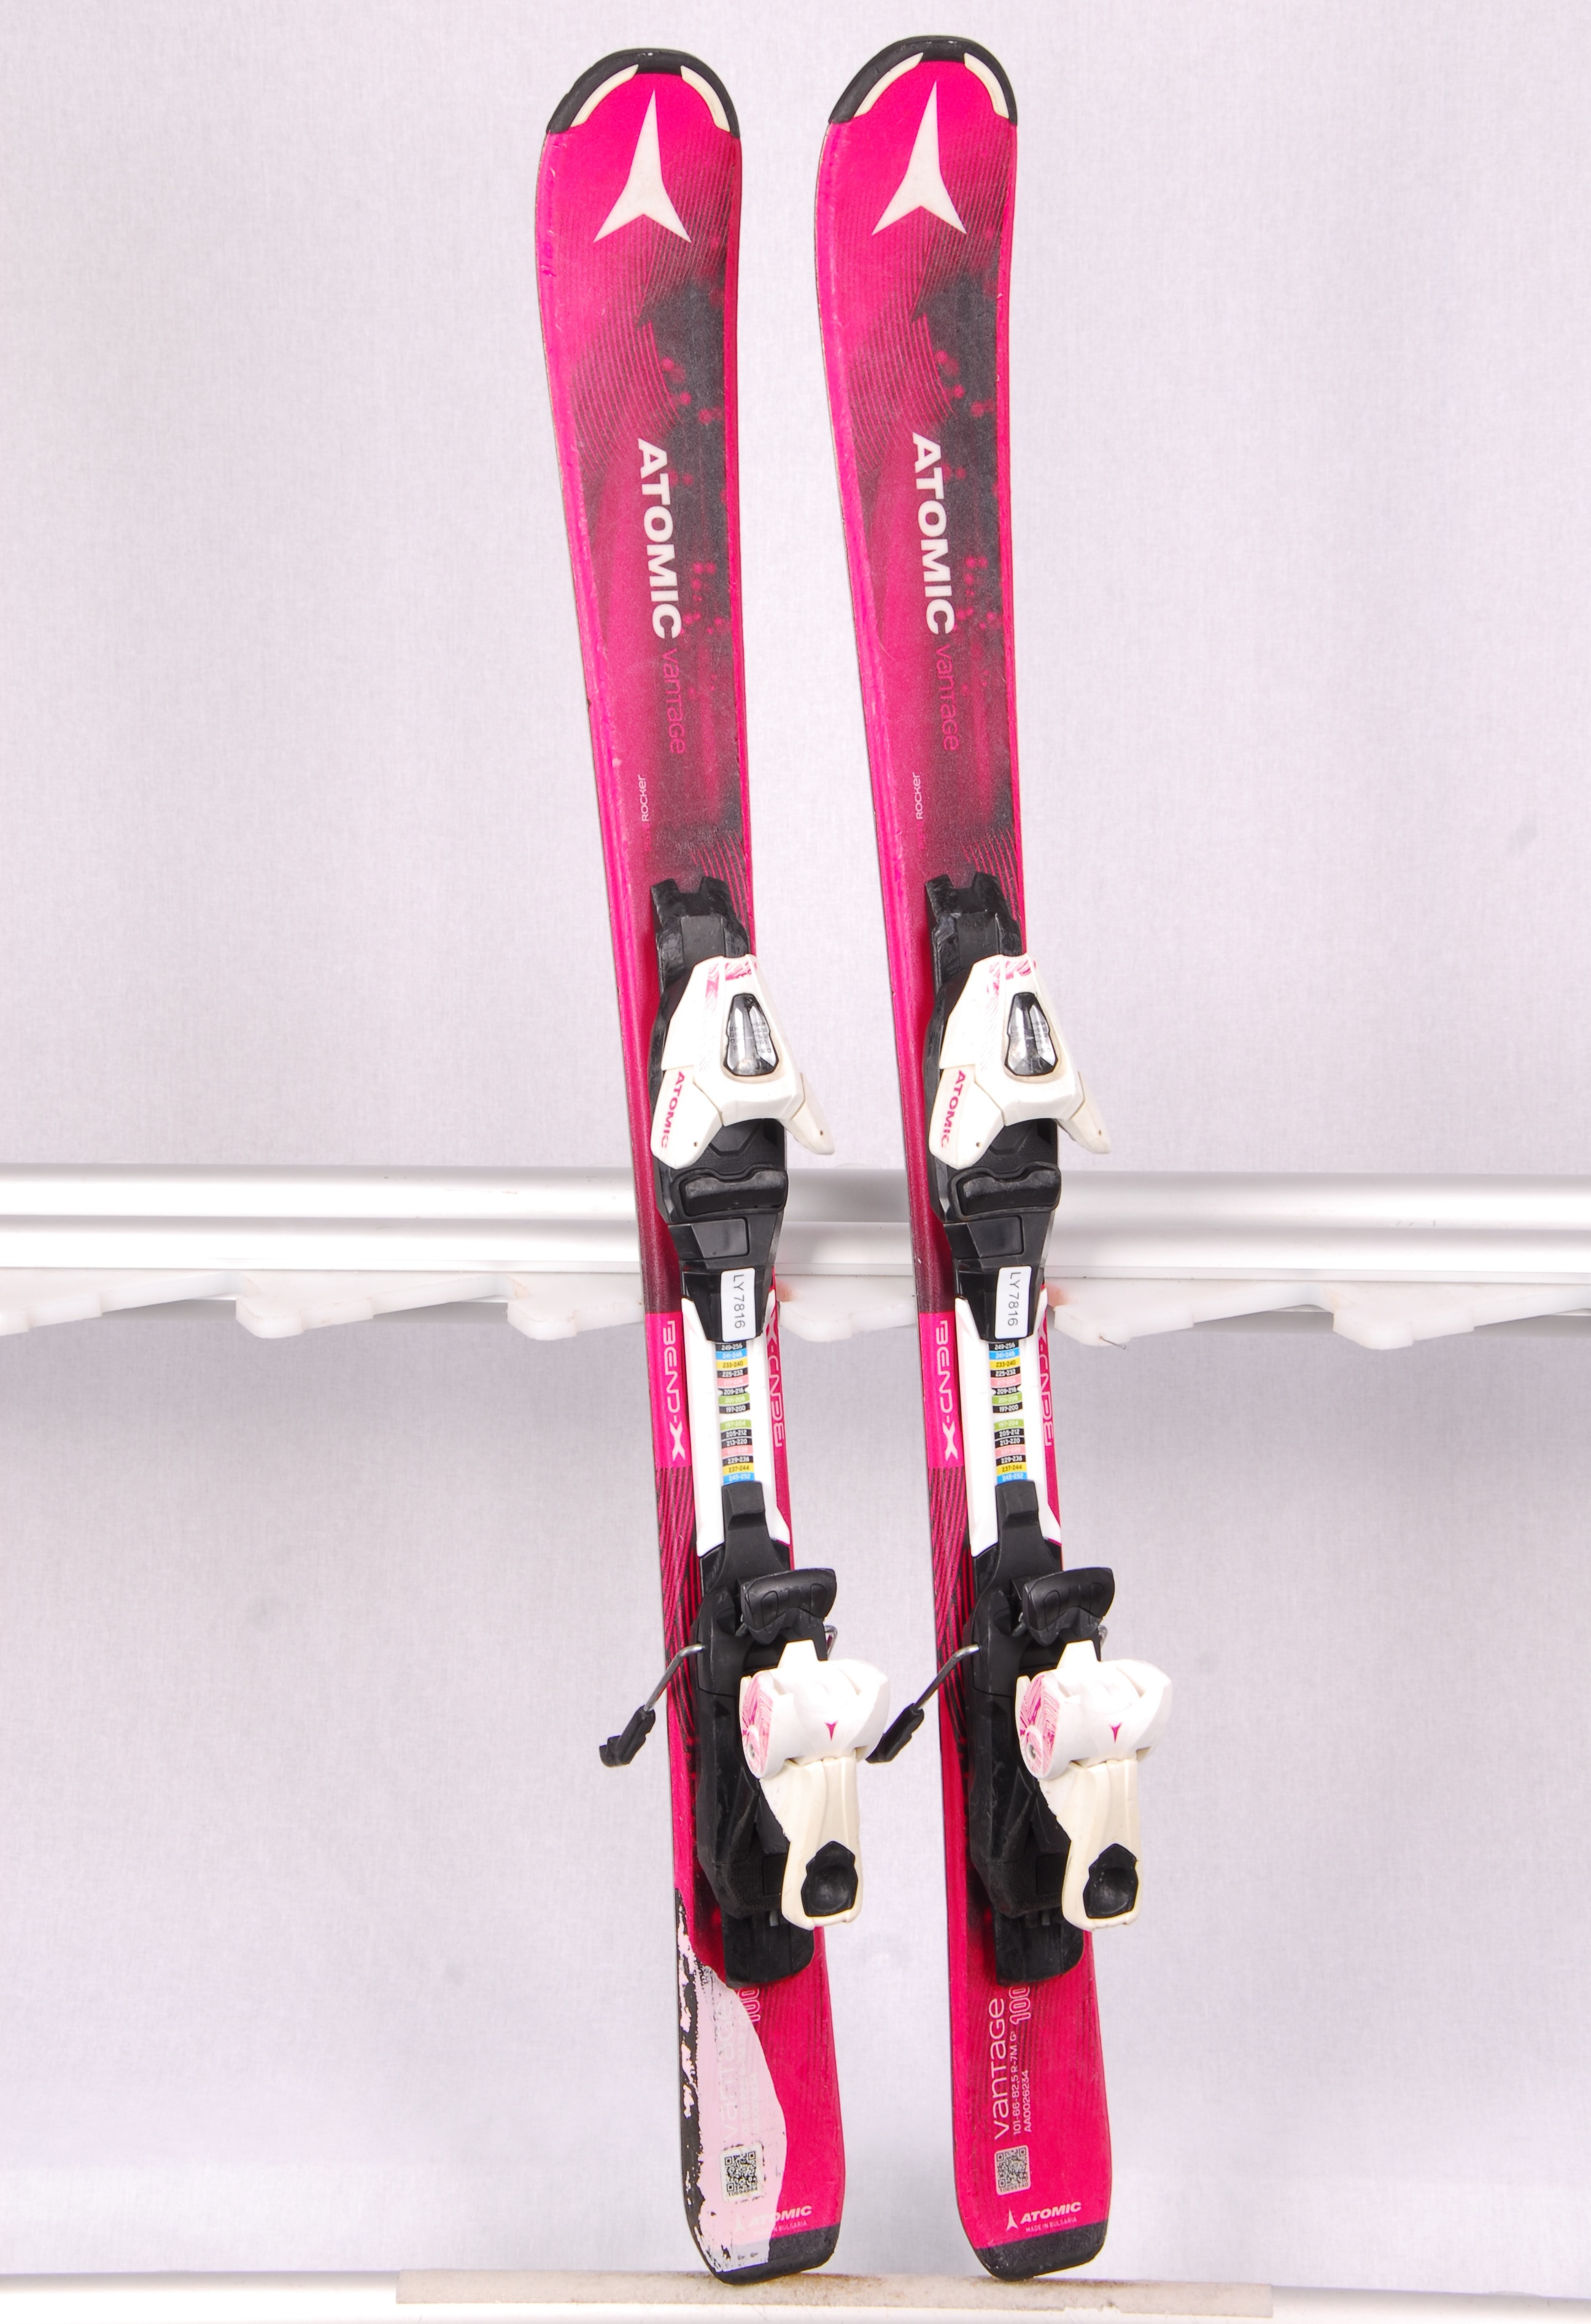 Ben depressief telex meesteres children's/junior skis ATOMIC VANTAGE GIRL II pink + Atomic C5 -  Mardosport.com